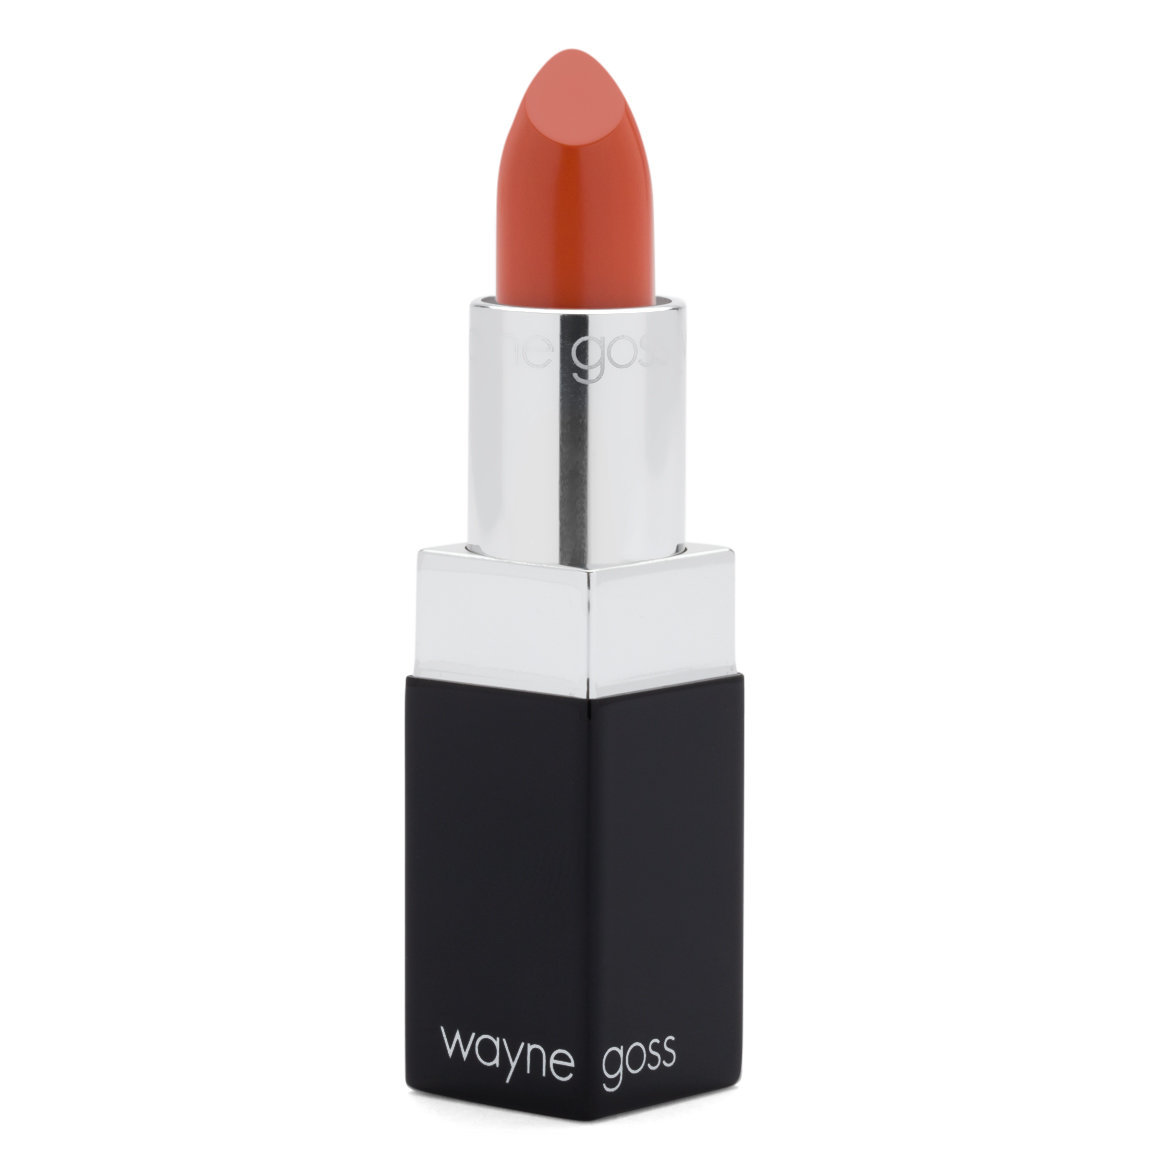 Wayne Goss The Luxury Cream Lipstick Orchid alternative view 1.